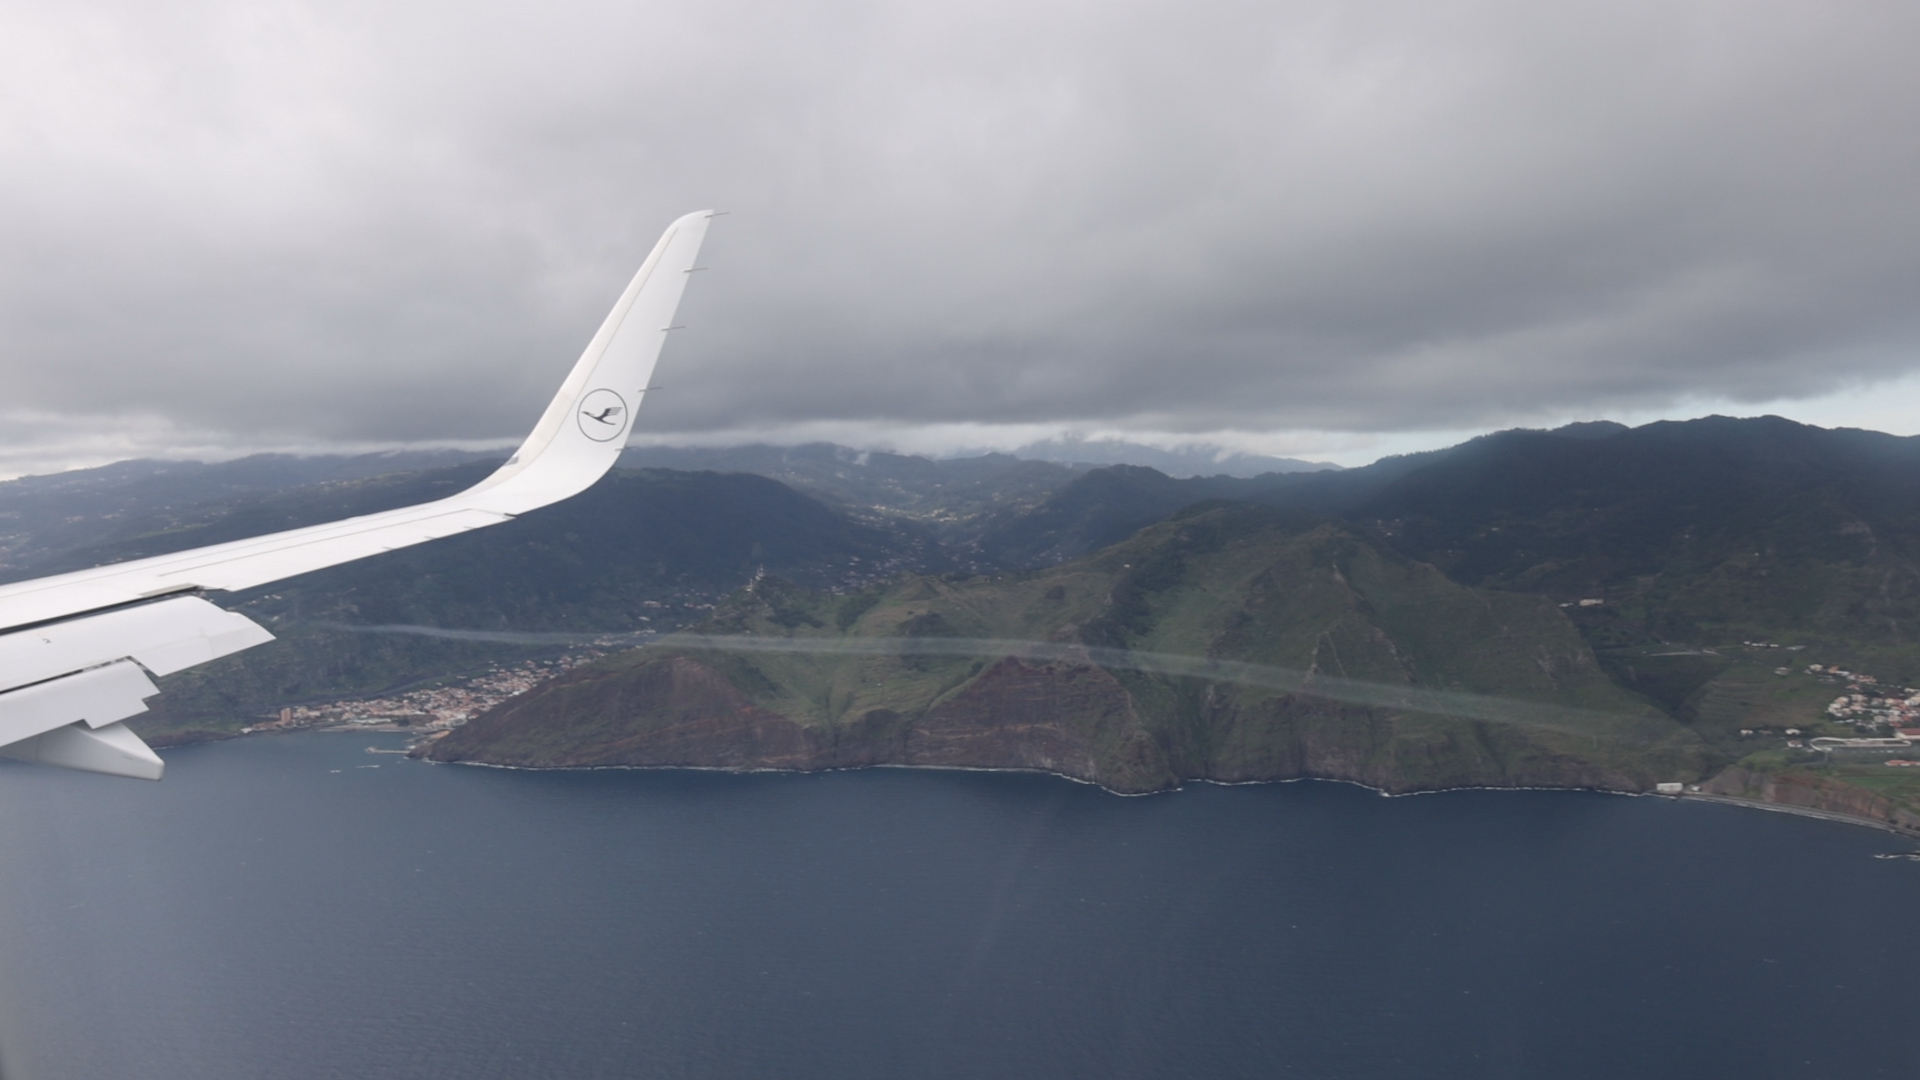 Anflug auf Funchal II